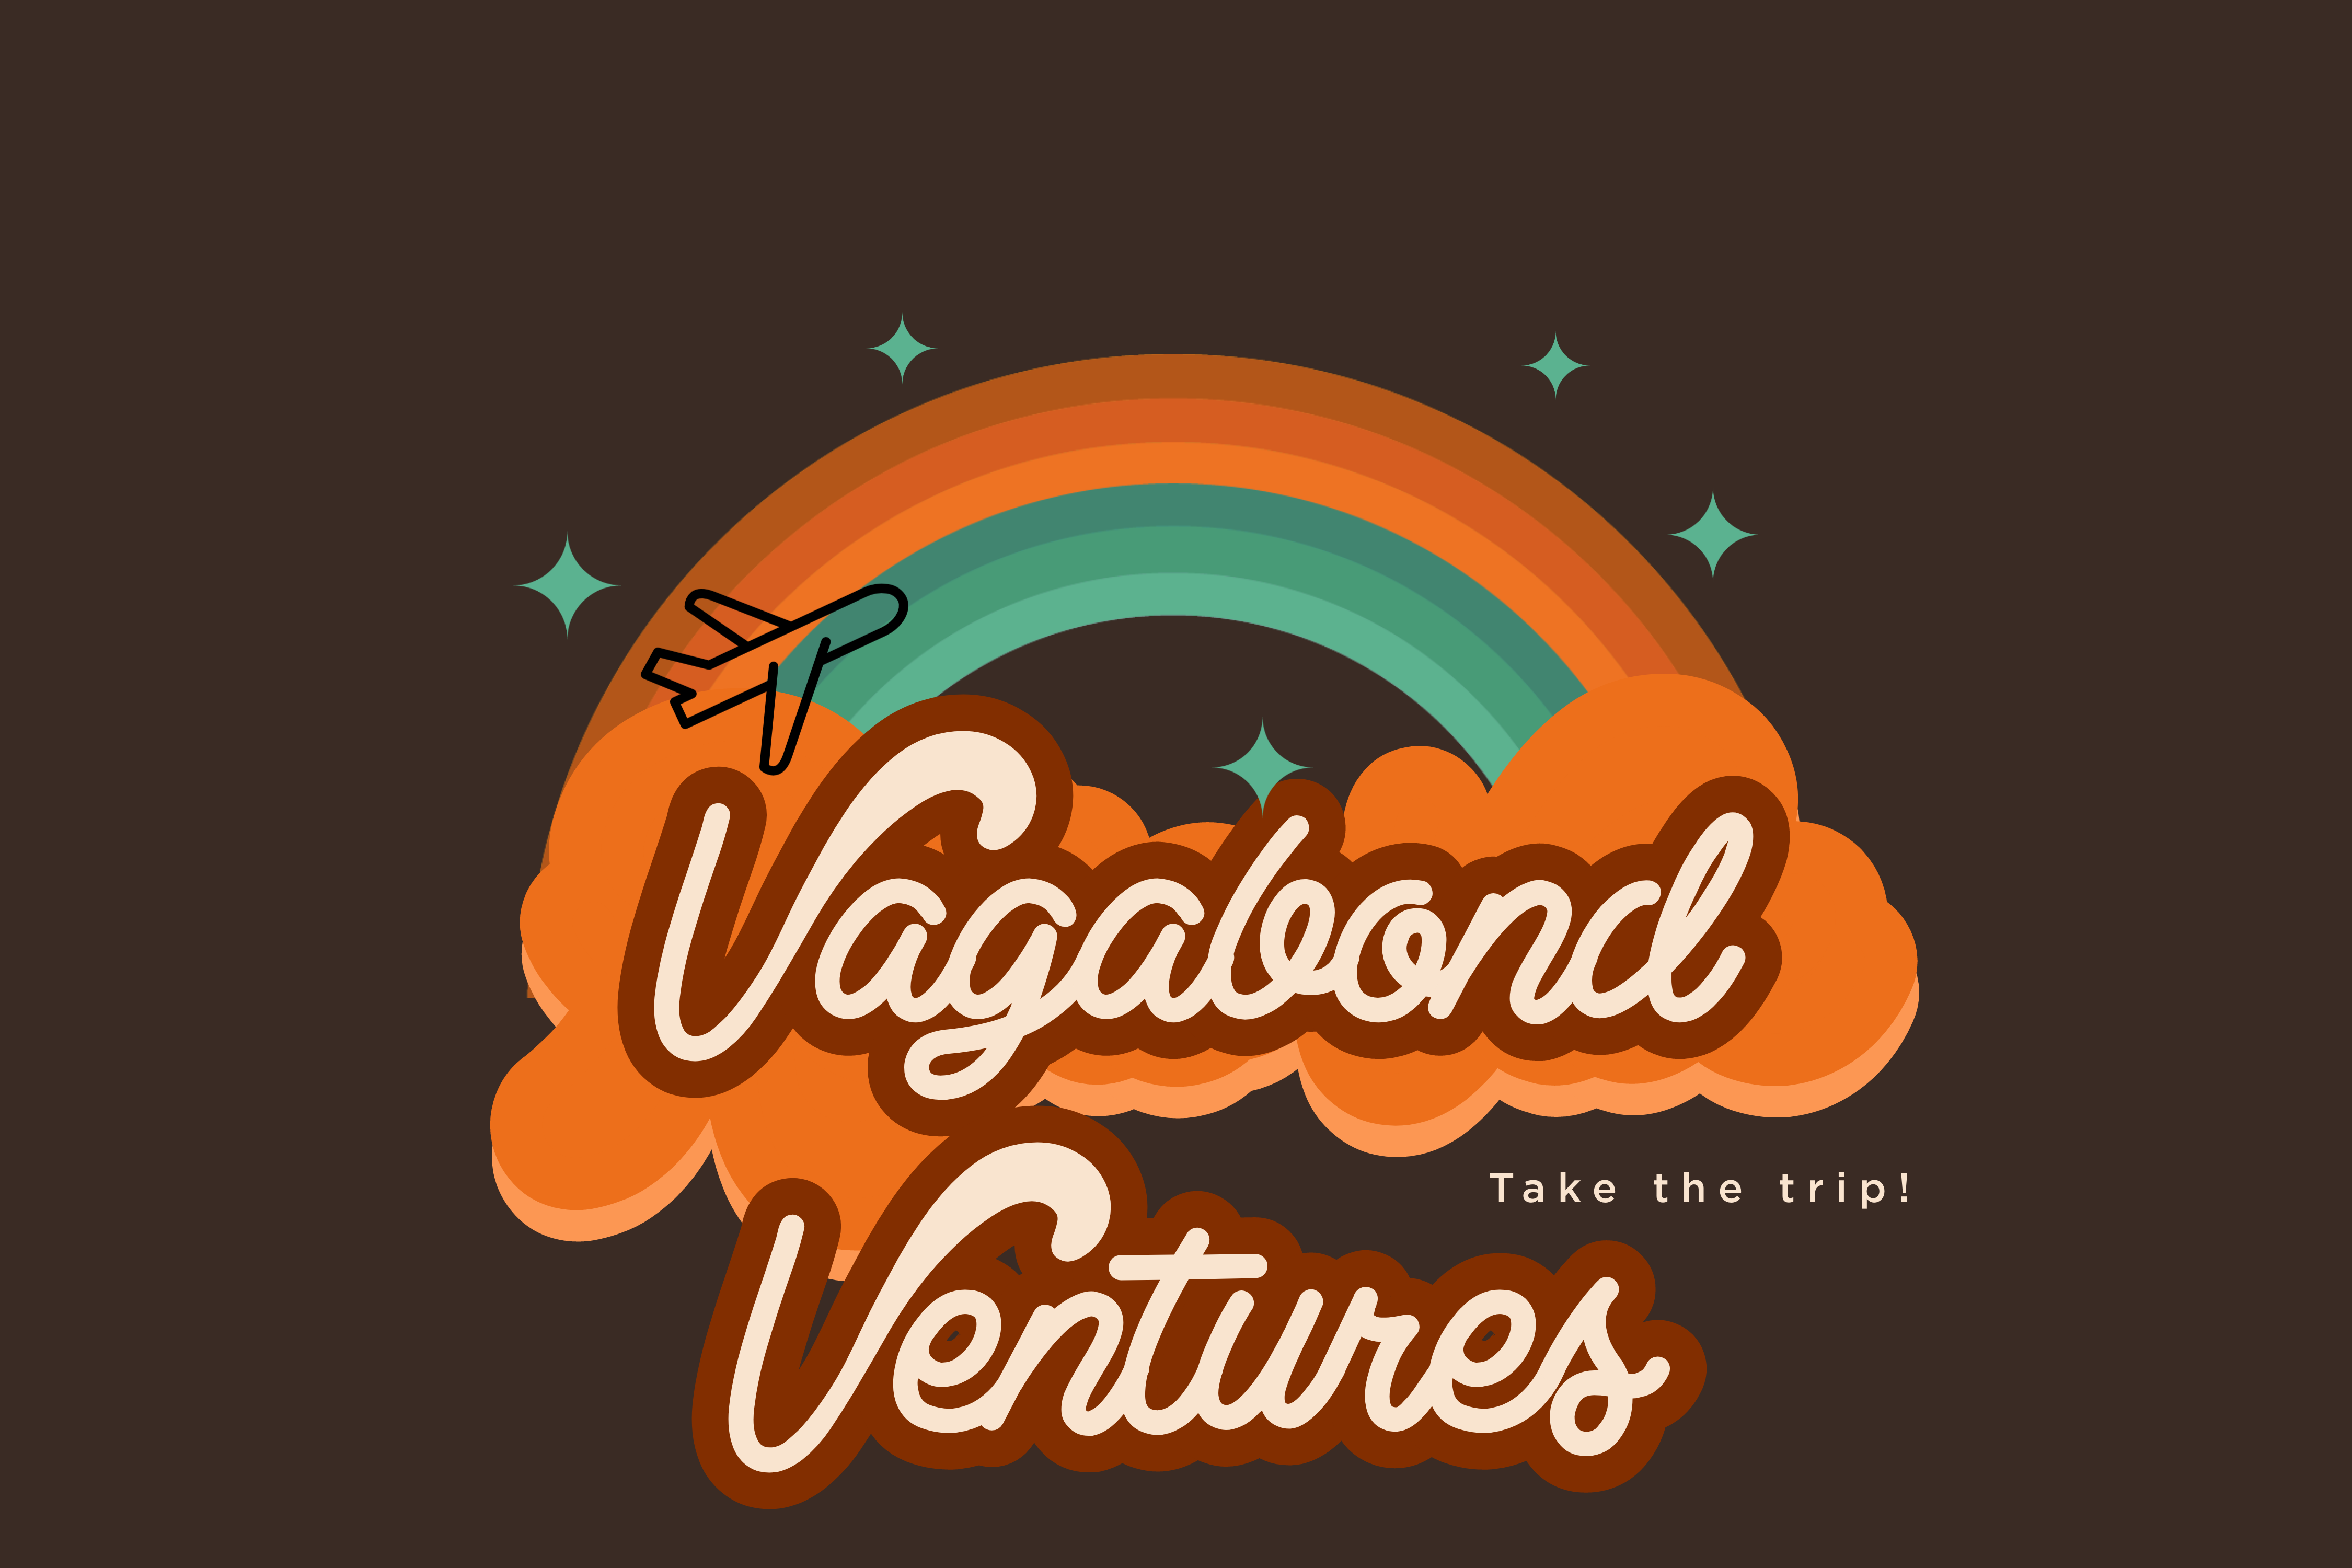 logo for Vagabond Ventures with rainbow sky and plane